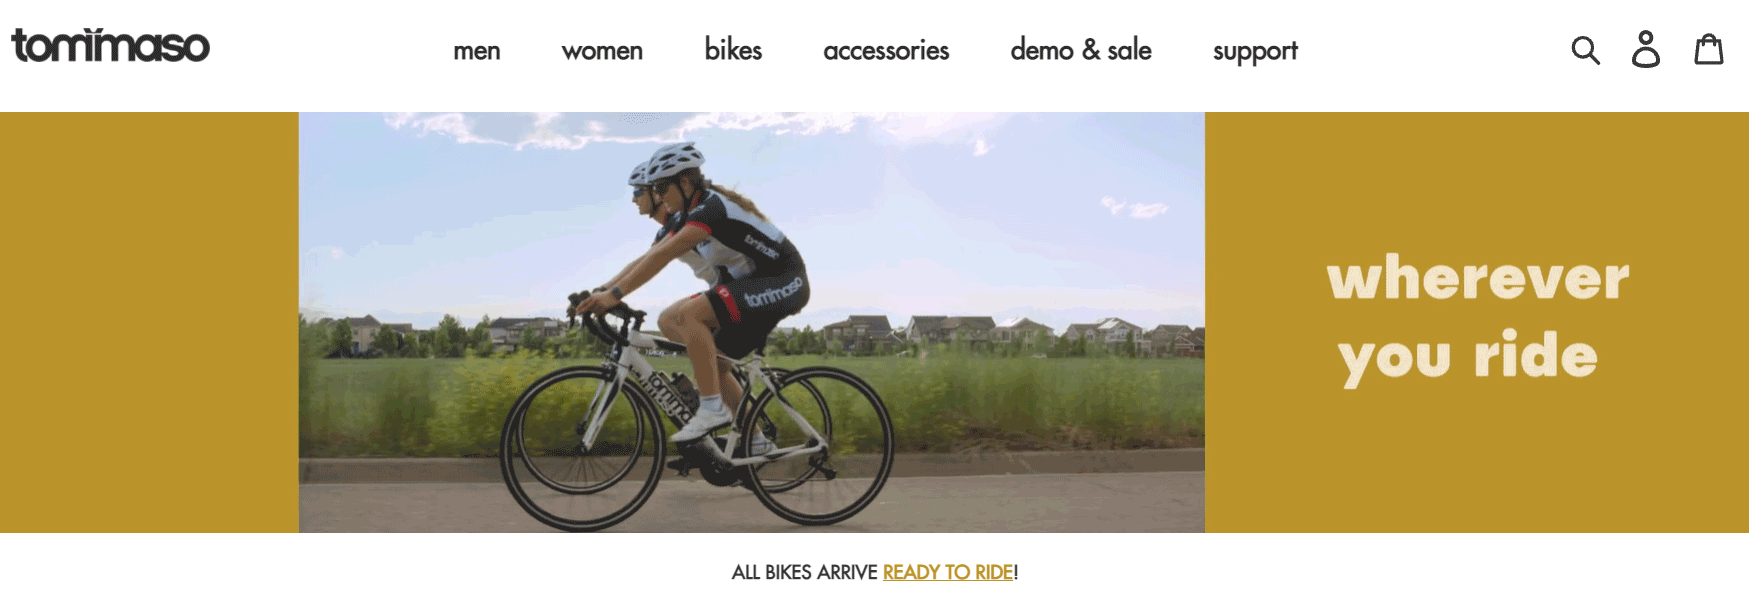 tommaso cycling website